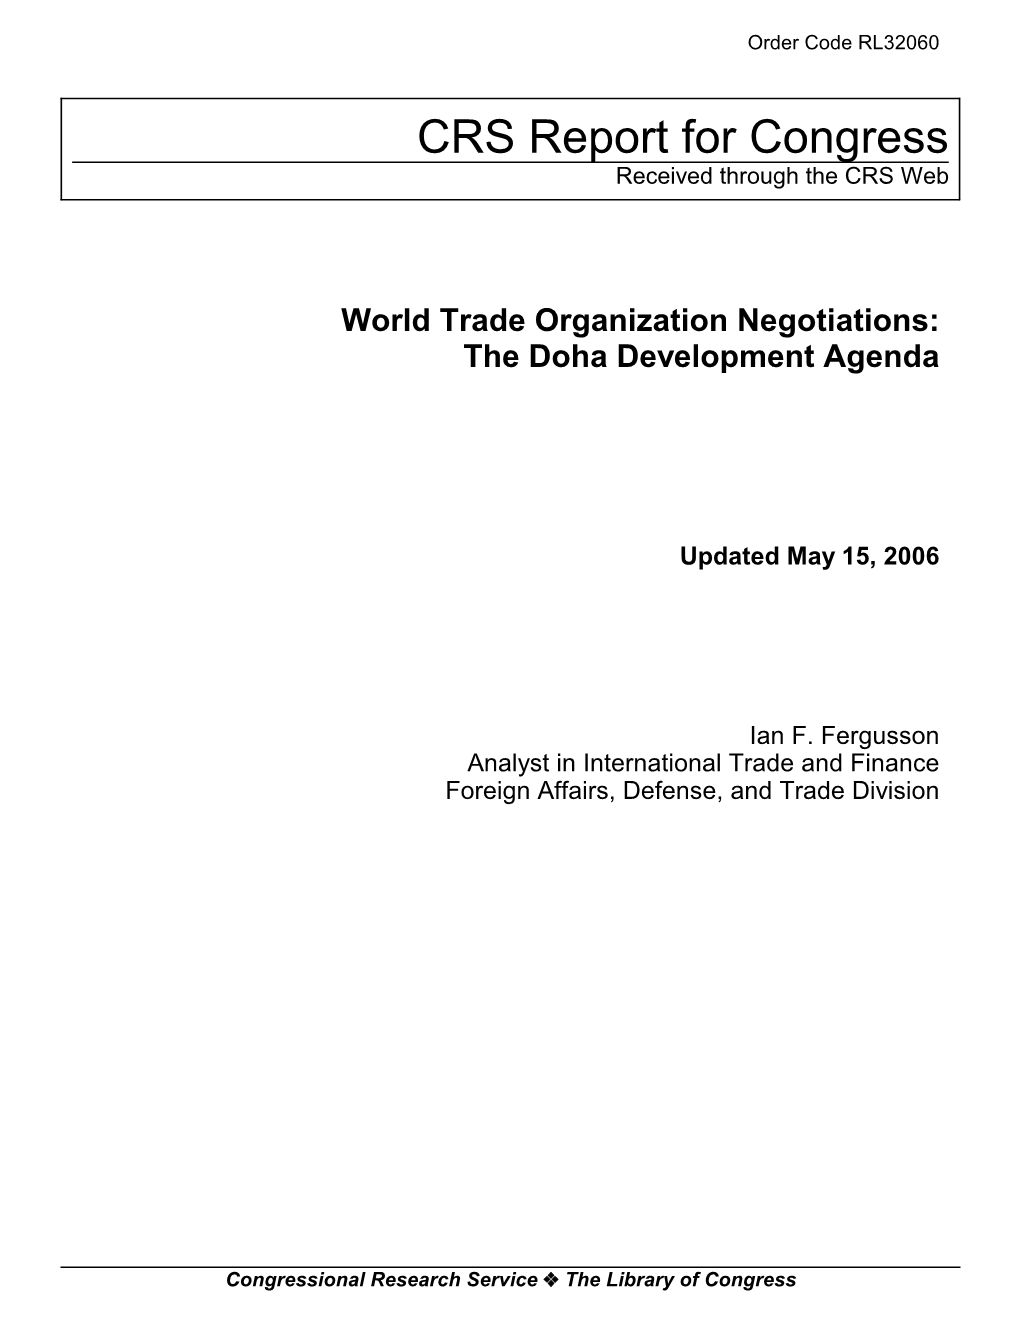 World Trade Organization Negotiations: the Doha Development Agenda